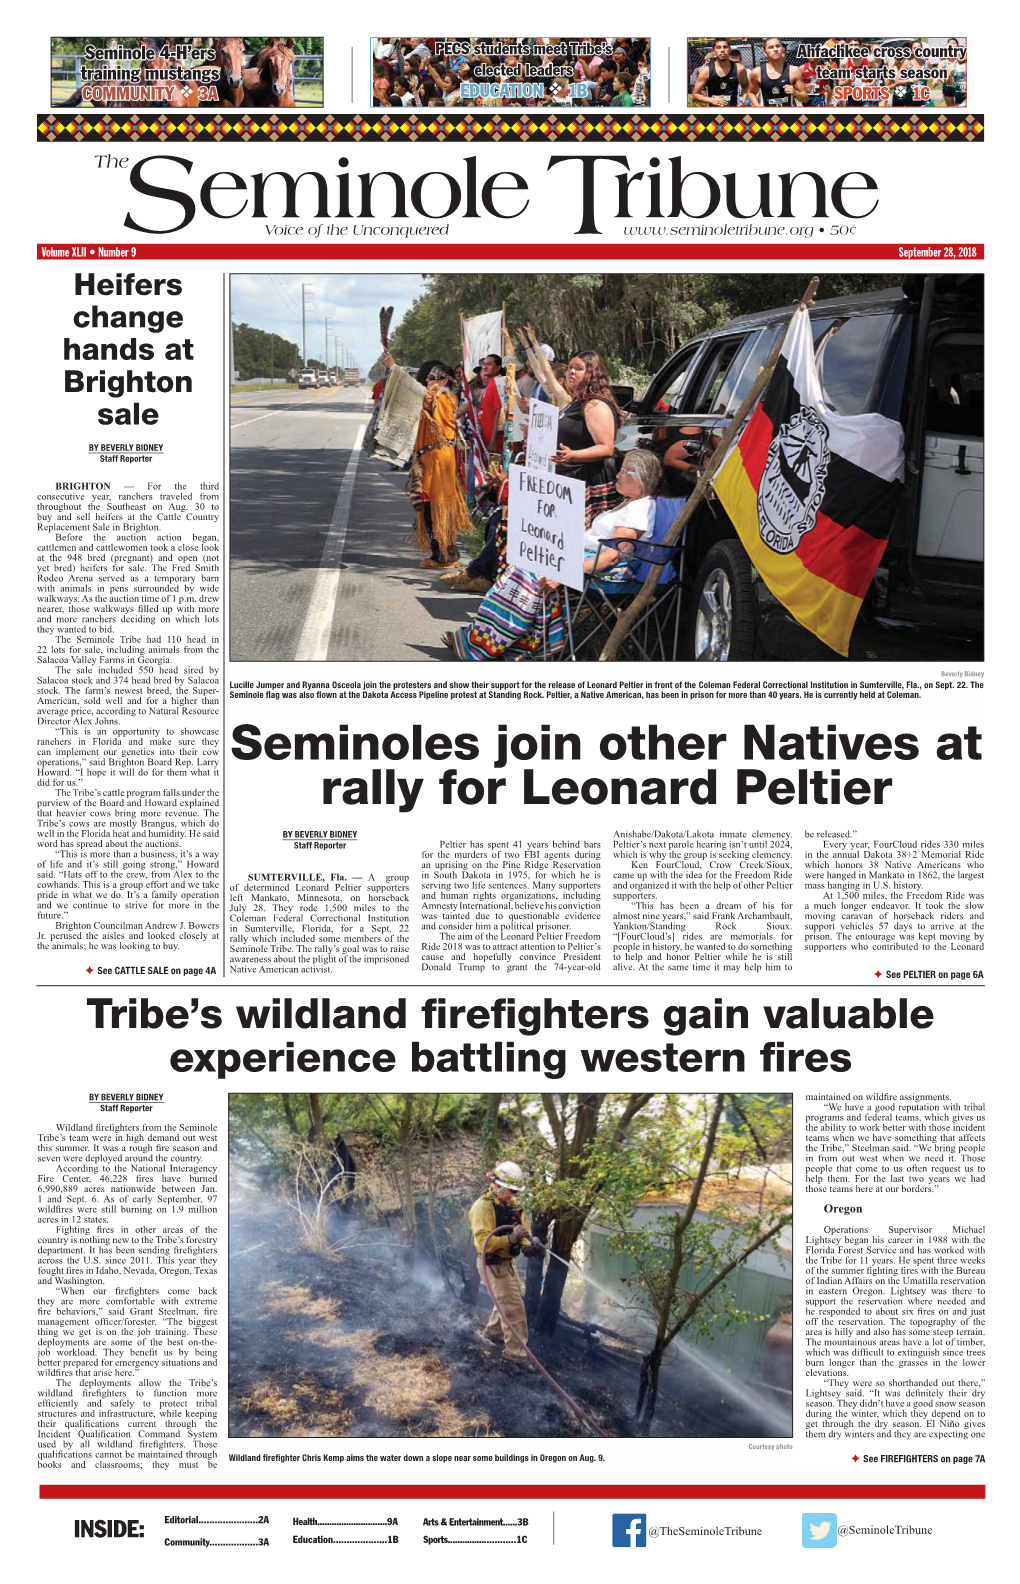 Seminoles Join Other Natives at Rally for Leonard Peltier